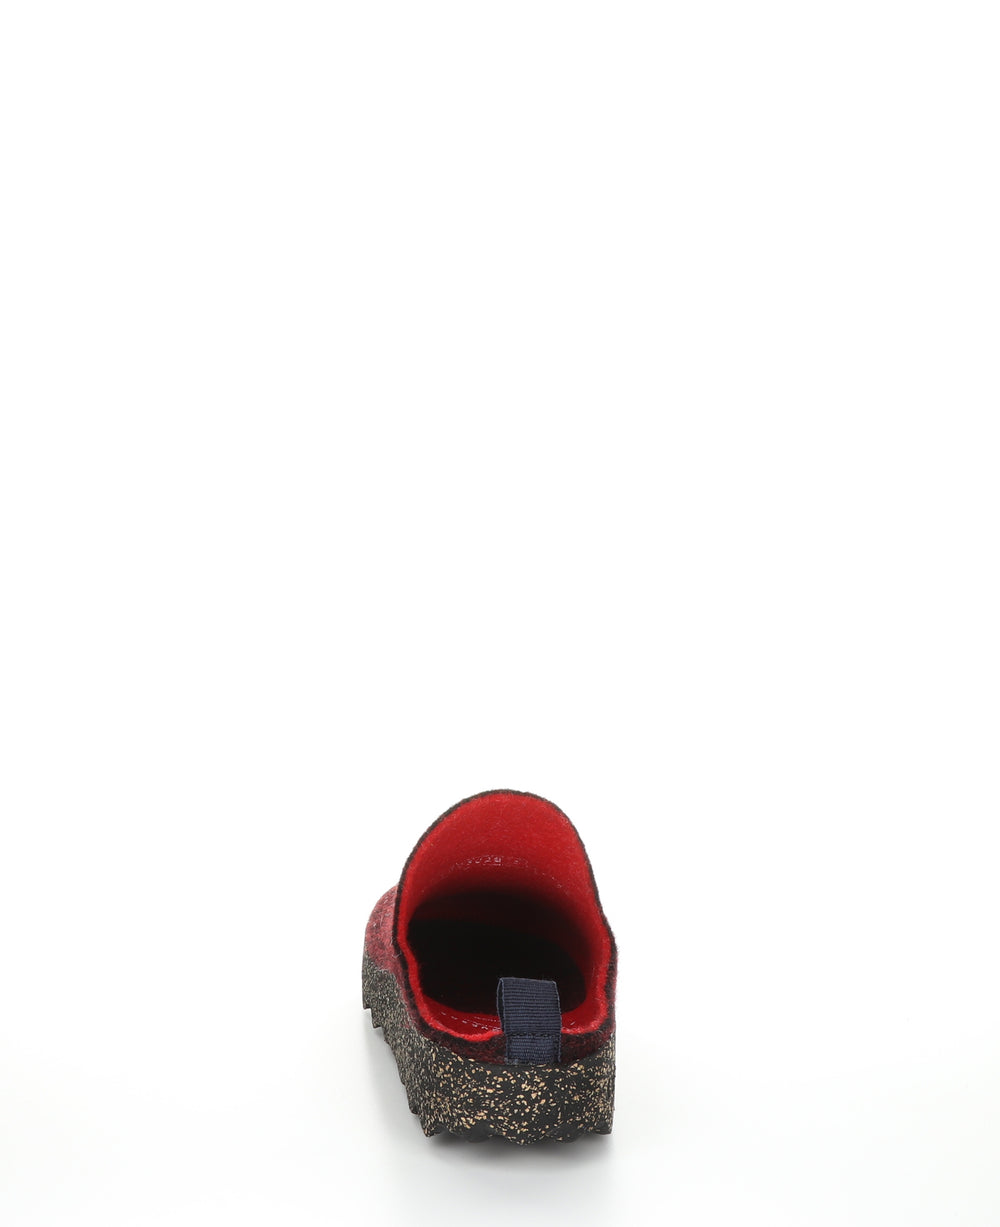 COME023ASP Merlot Round Toe Shoes